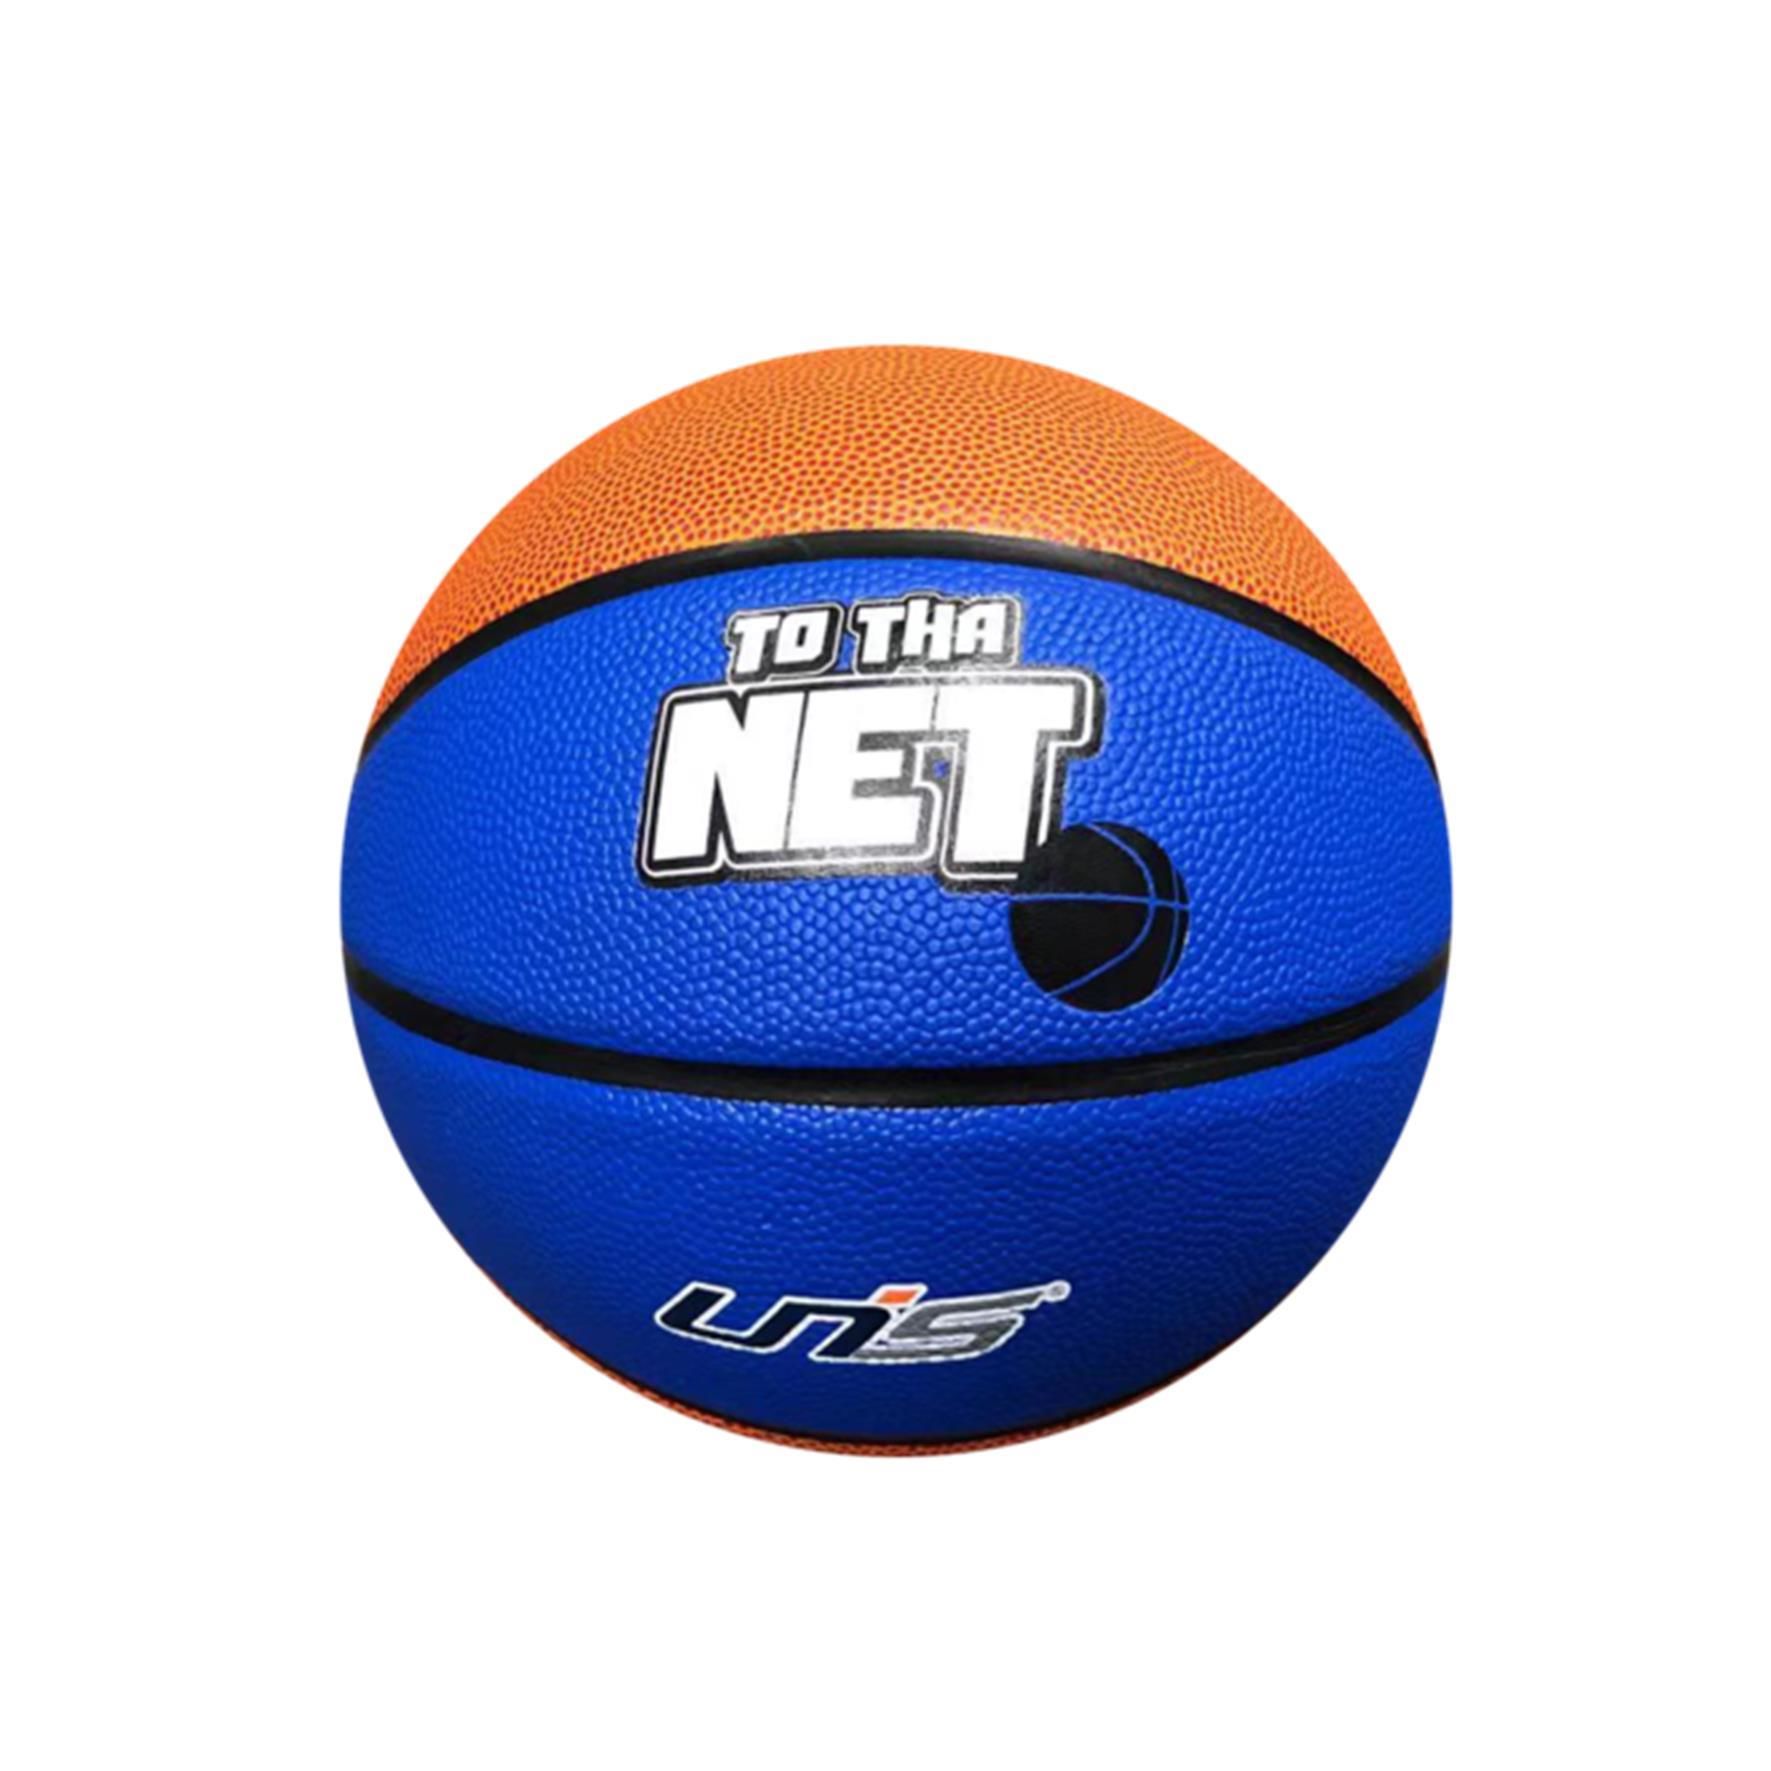 To Tha Net Basketball, Ball_T148-407-000/410000019